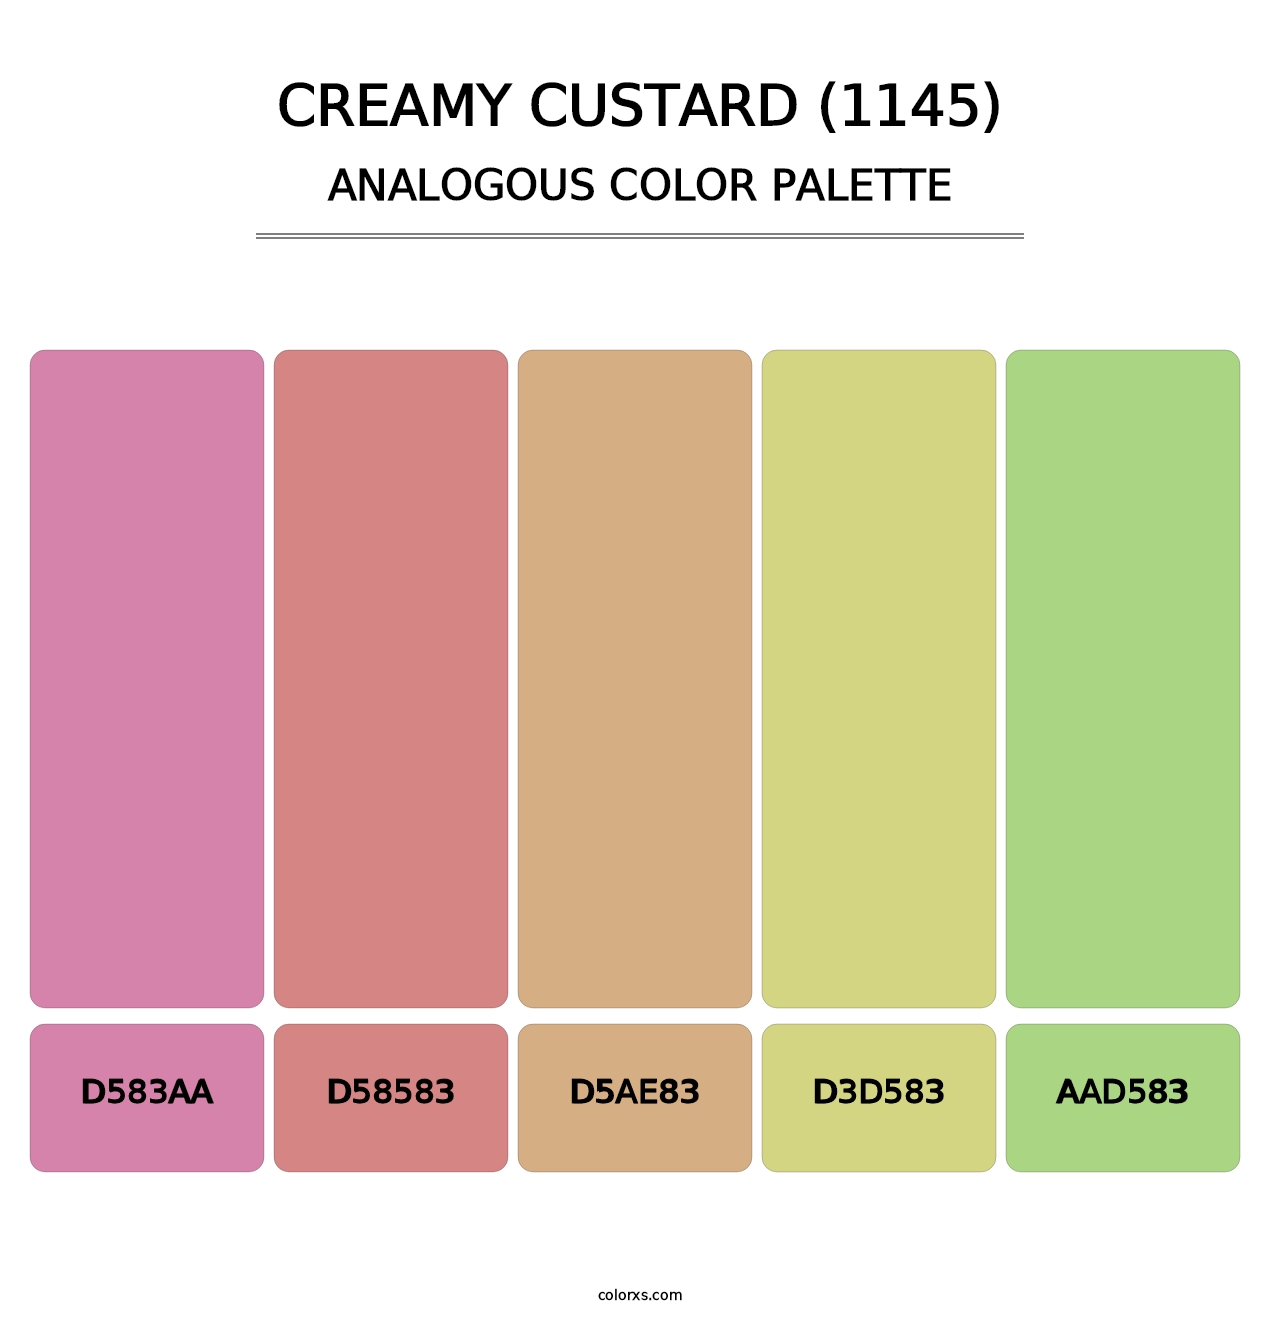 Creamy Custard (1145) - Analogous Color Palette